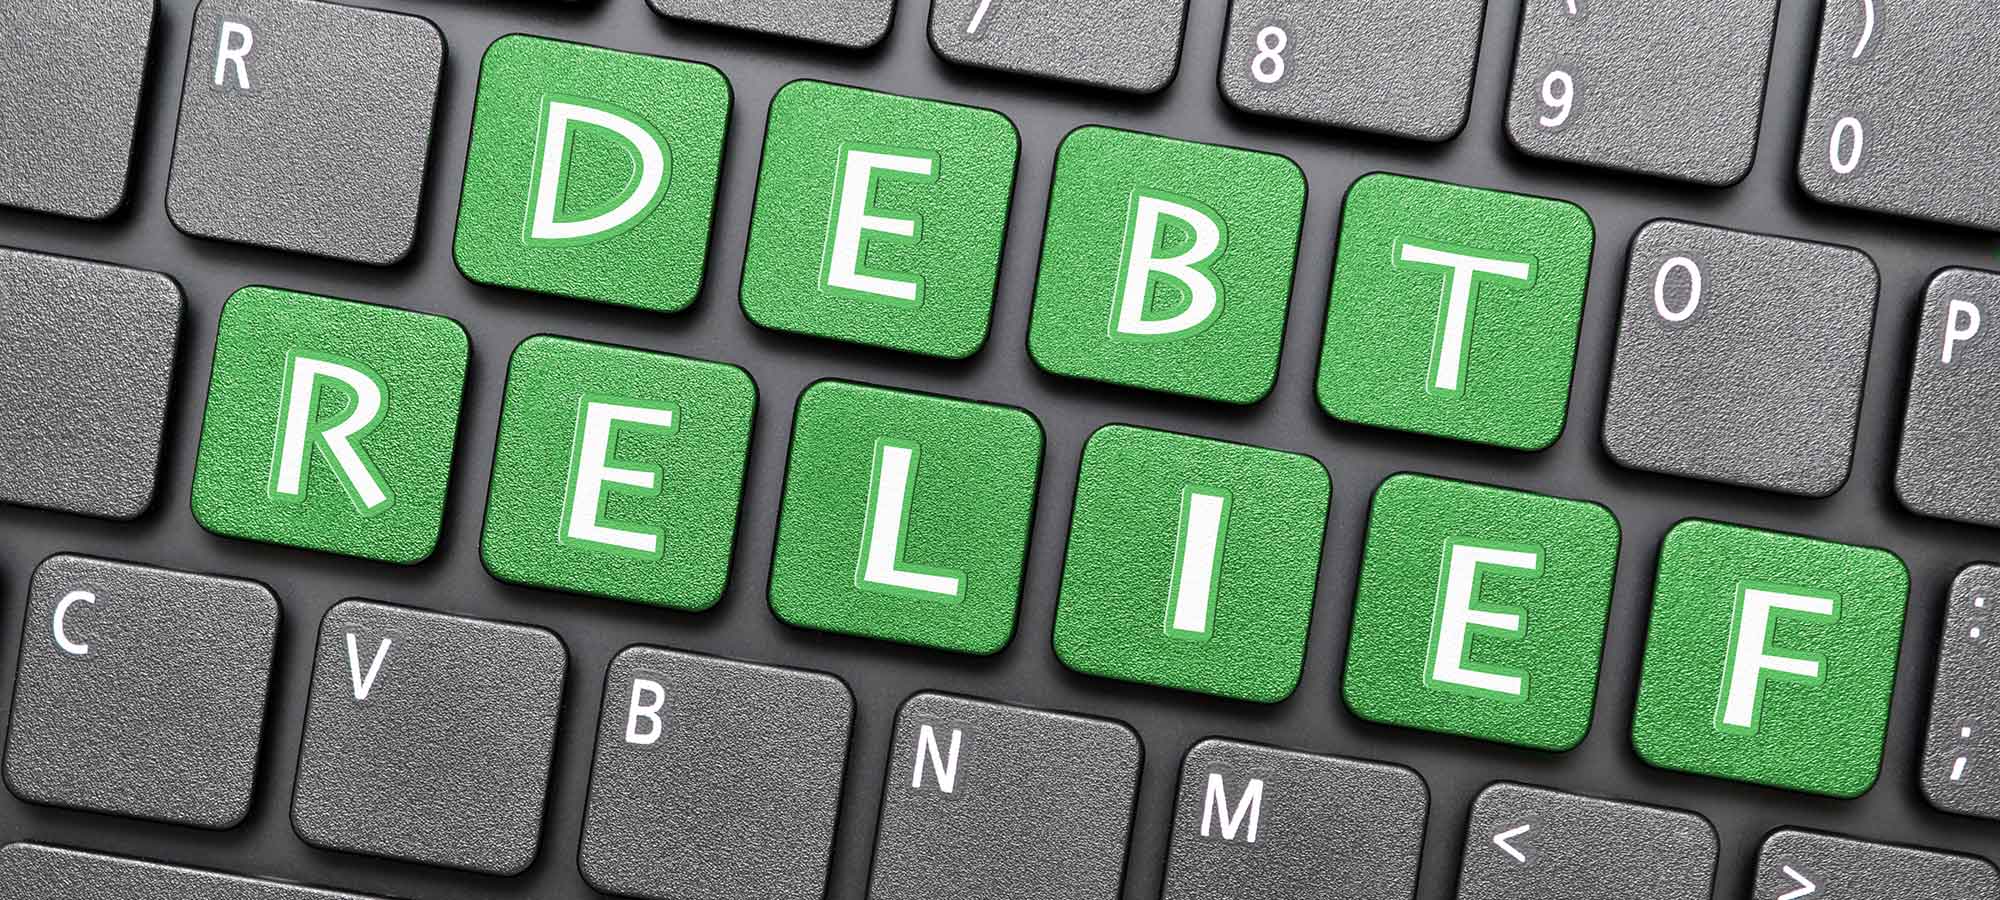 dom debt relief contact